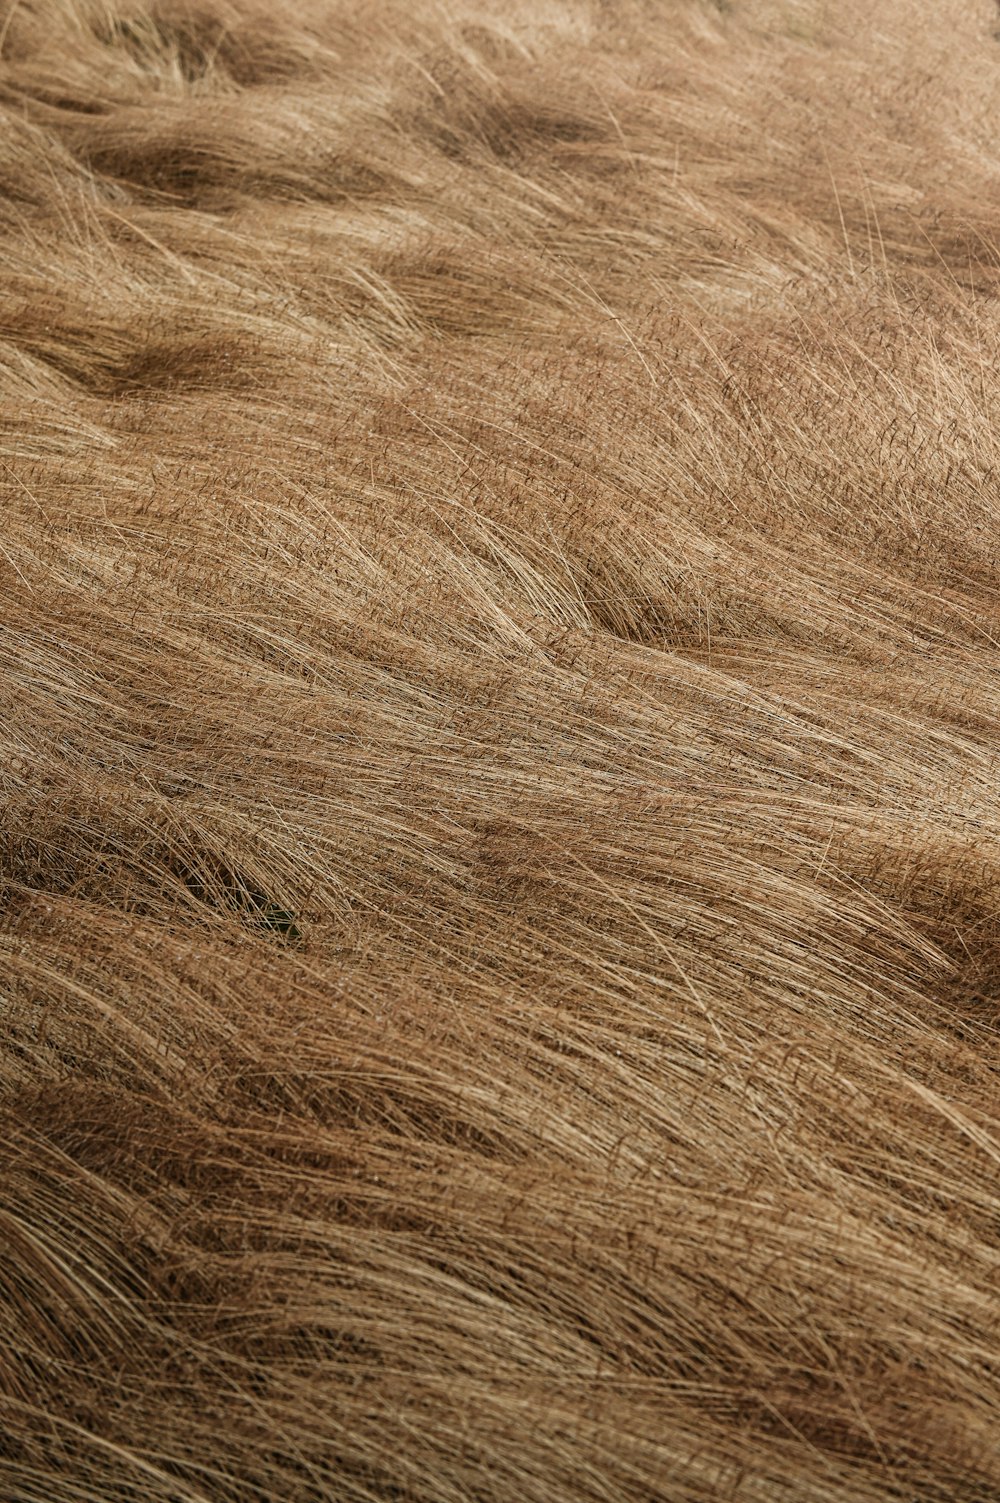 a close up view of a cat's fur